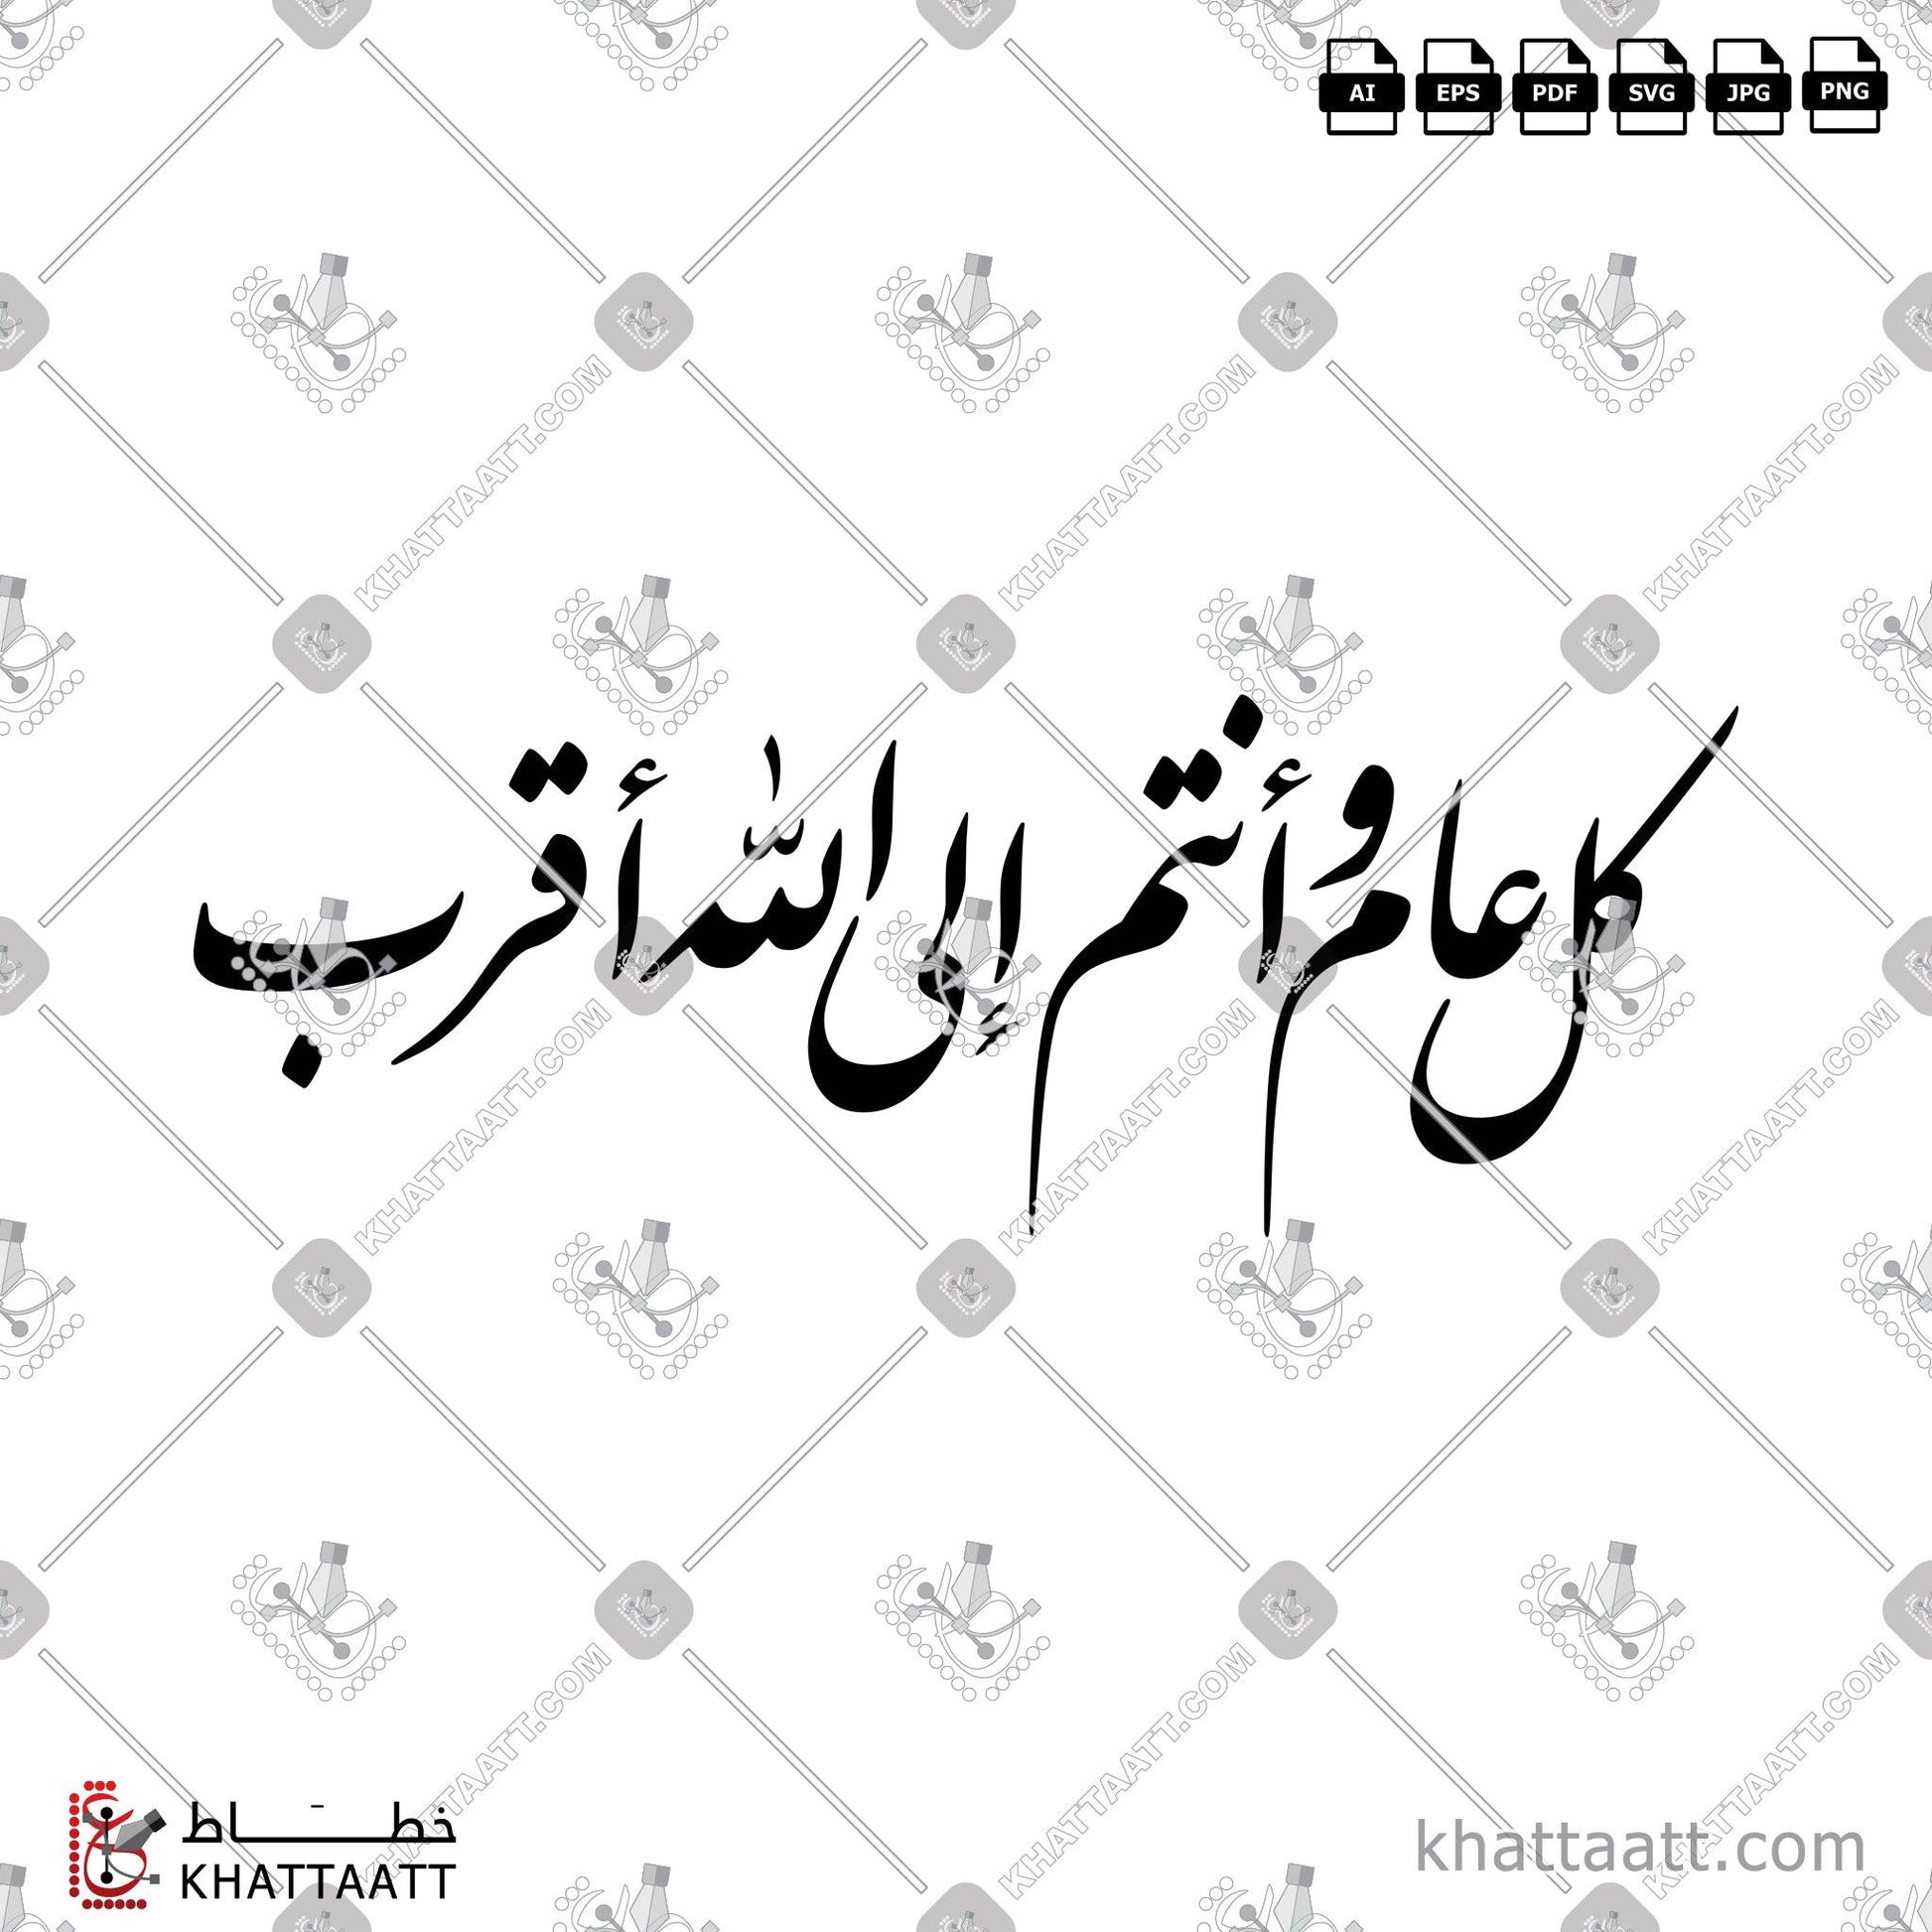 Download Arabic Calligraphy of كل عام وأنتم إلى الله أقرب in Farsi - الخط الفارسي in vector and .png